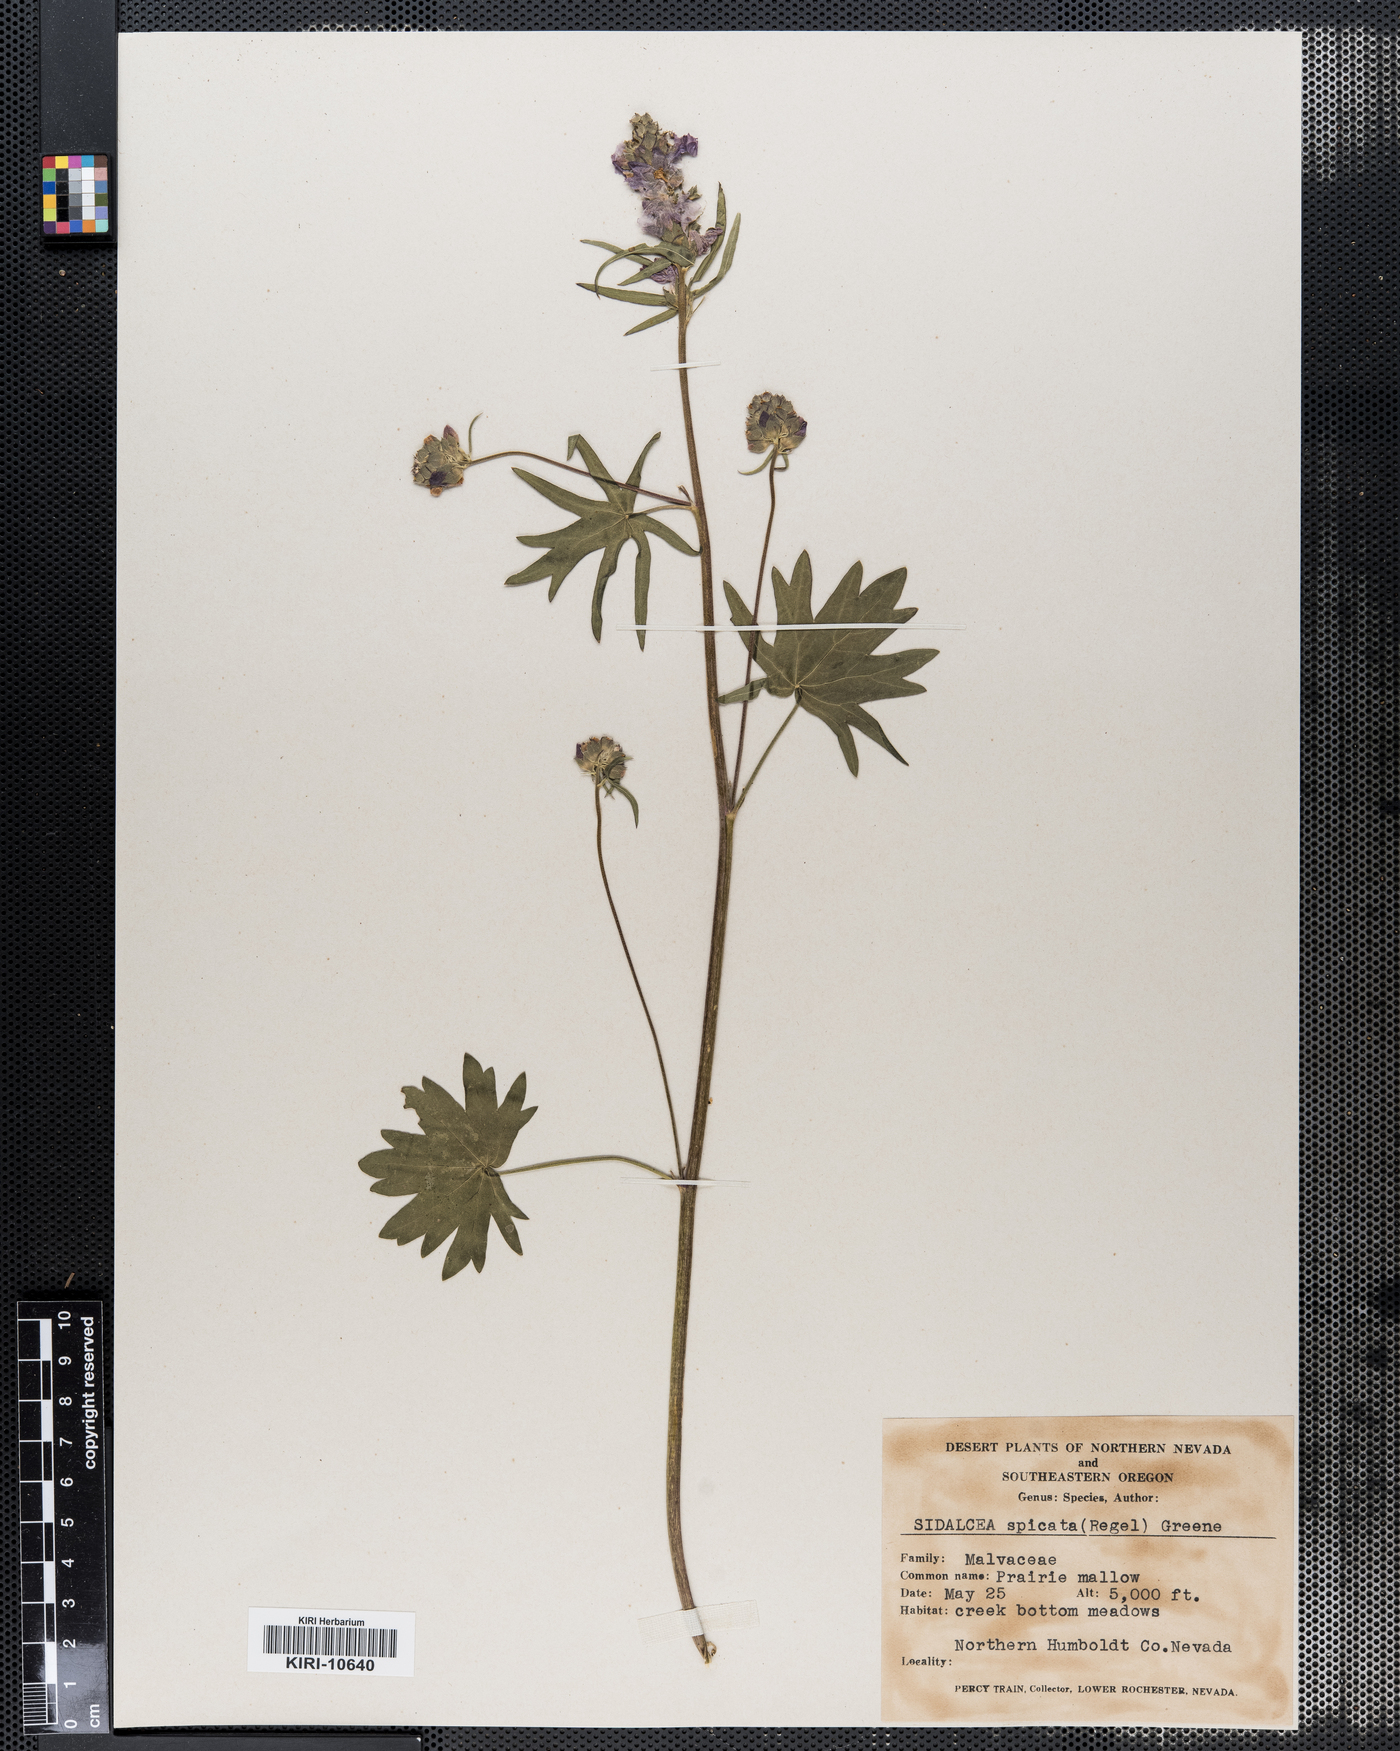 Sidalcea oregana ssp. spicata image